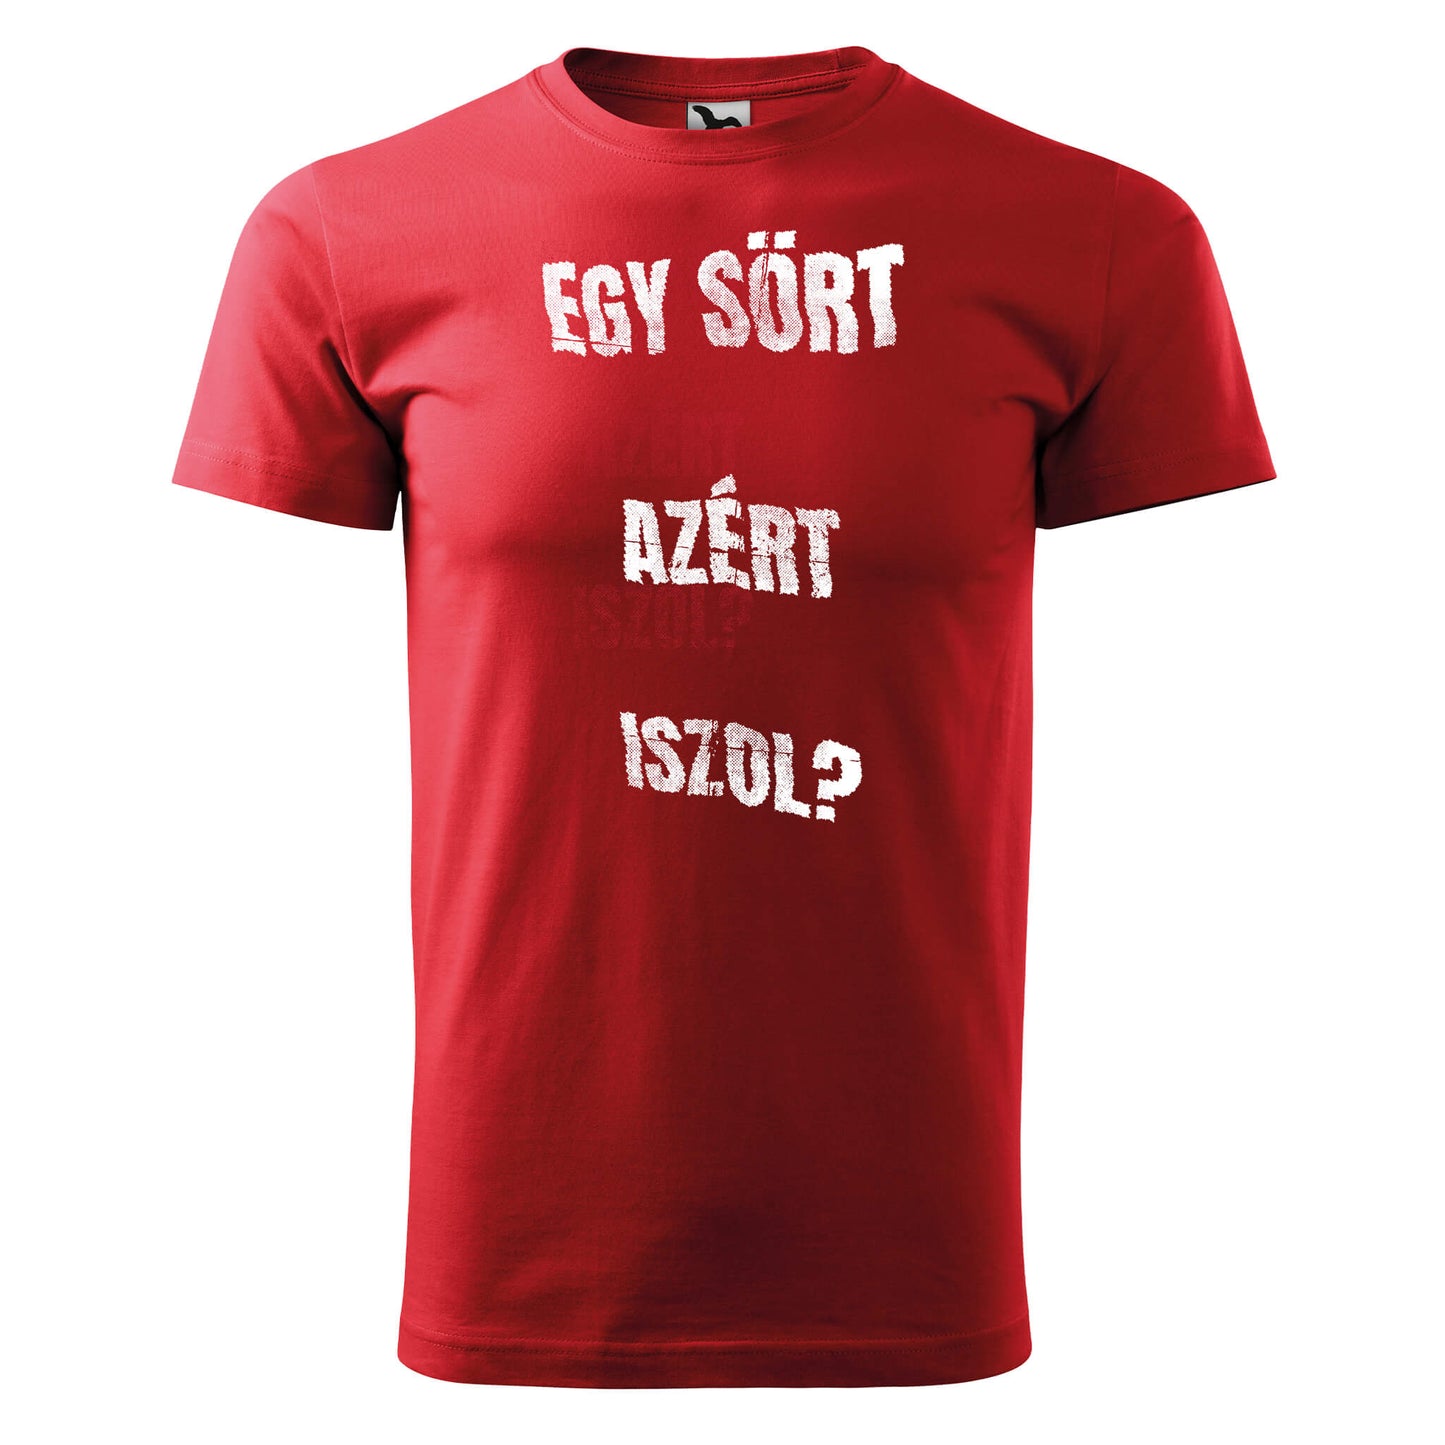 Egy sort azert iszol t-shirt - rvdesignprint